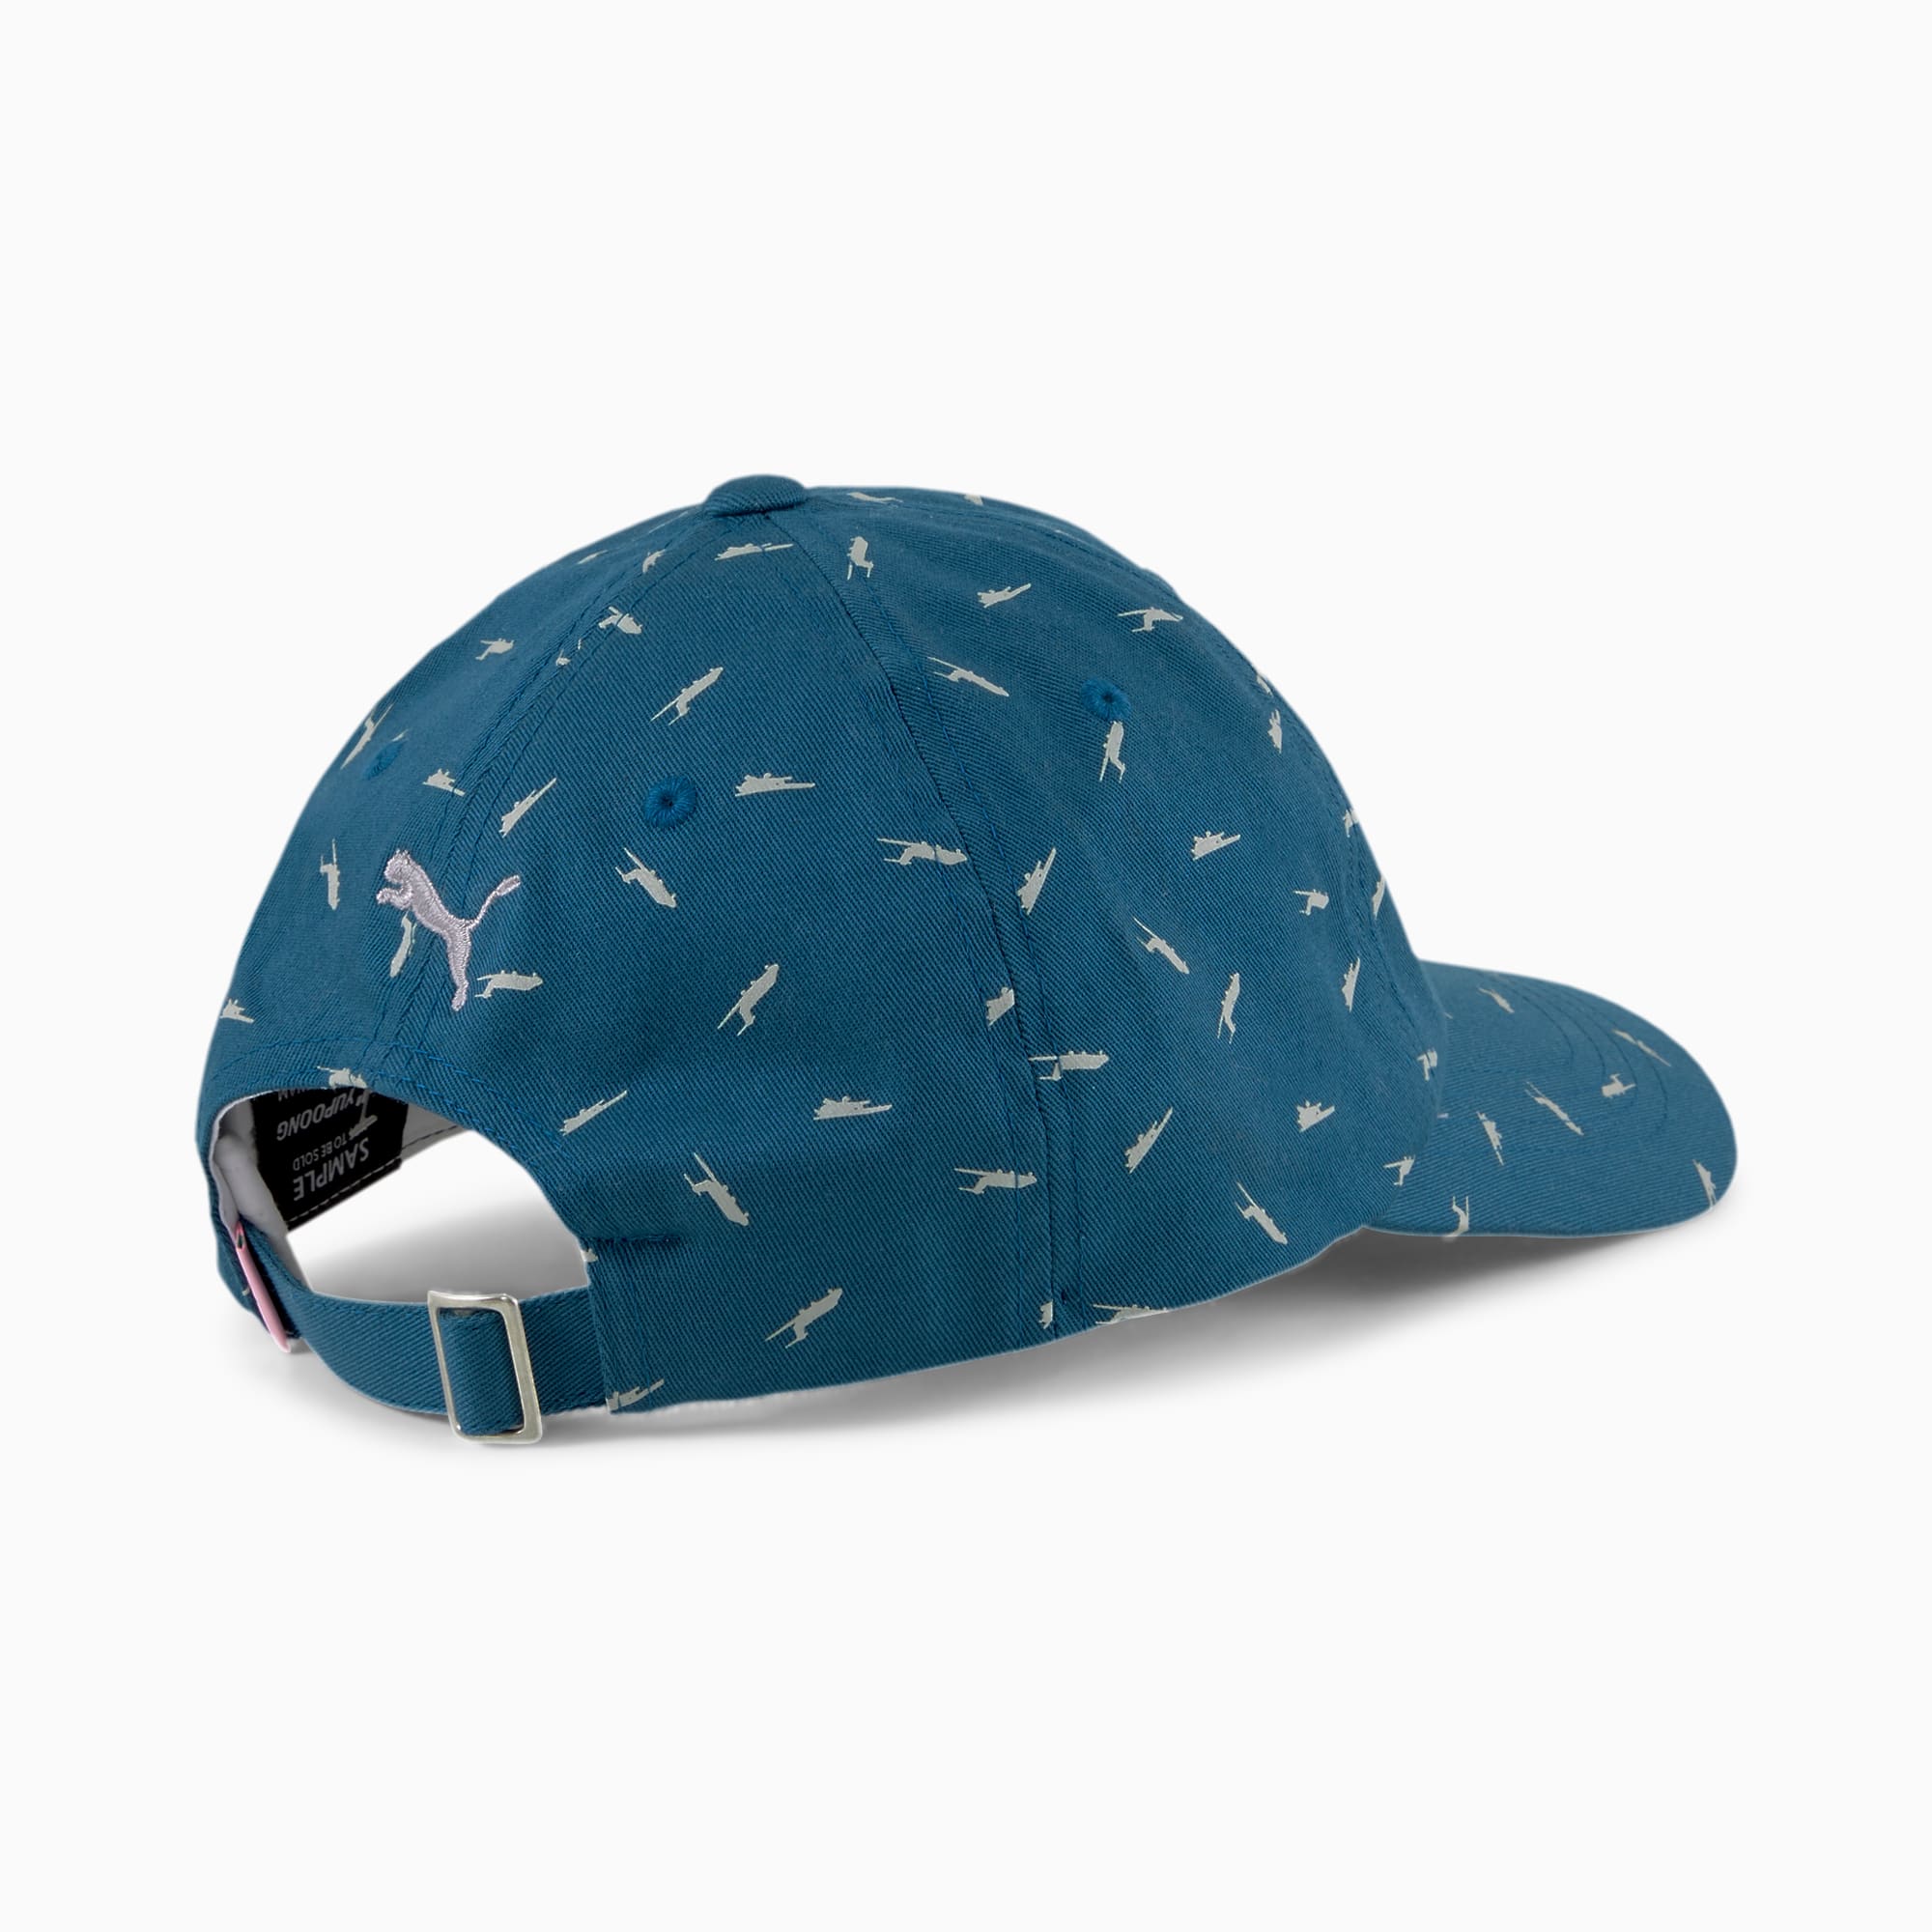 puma arnold palmer hats